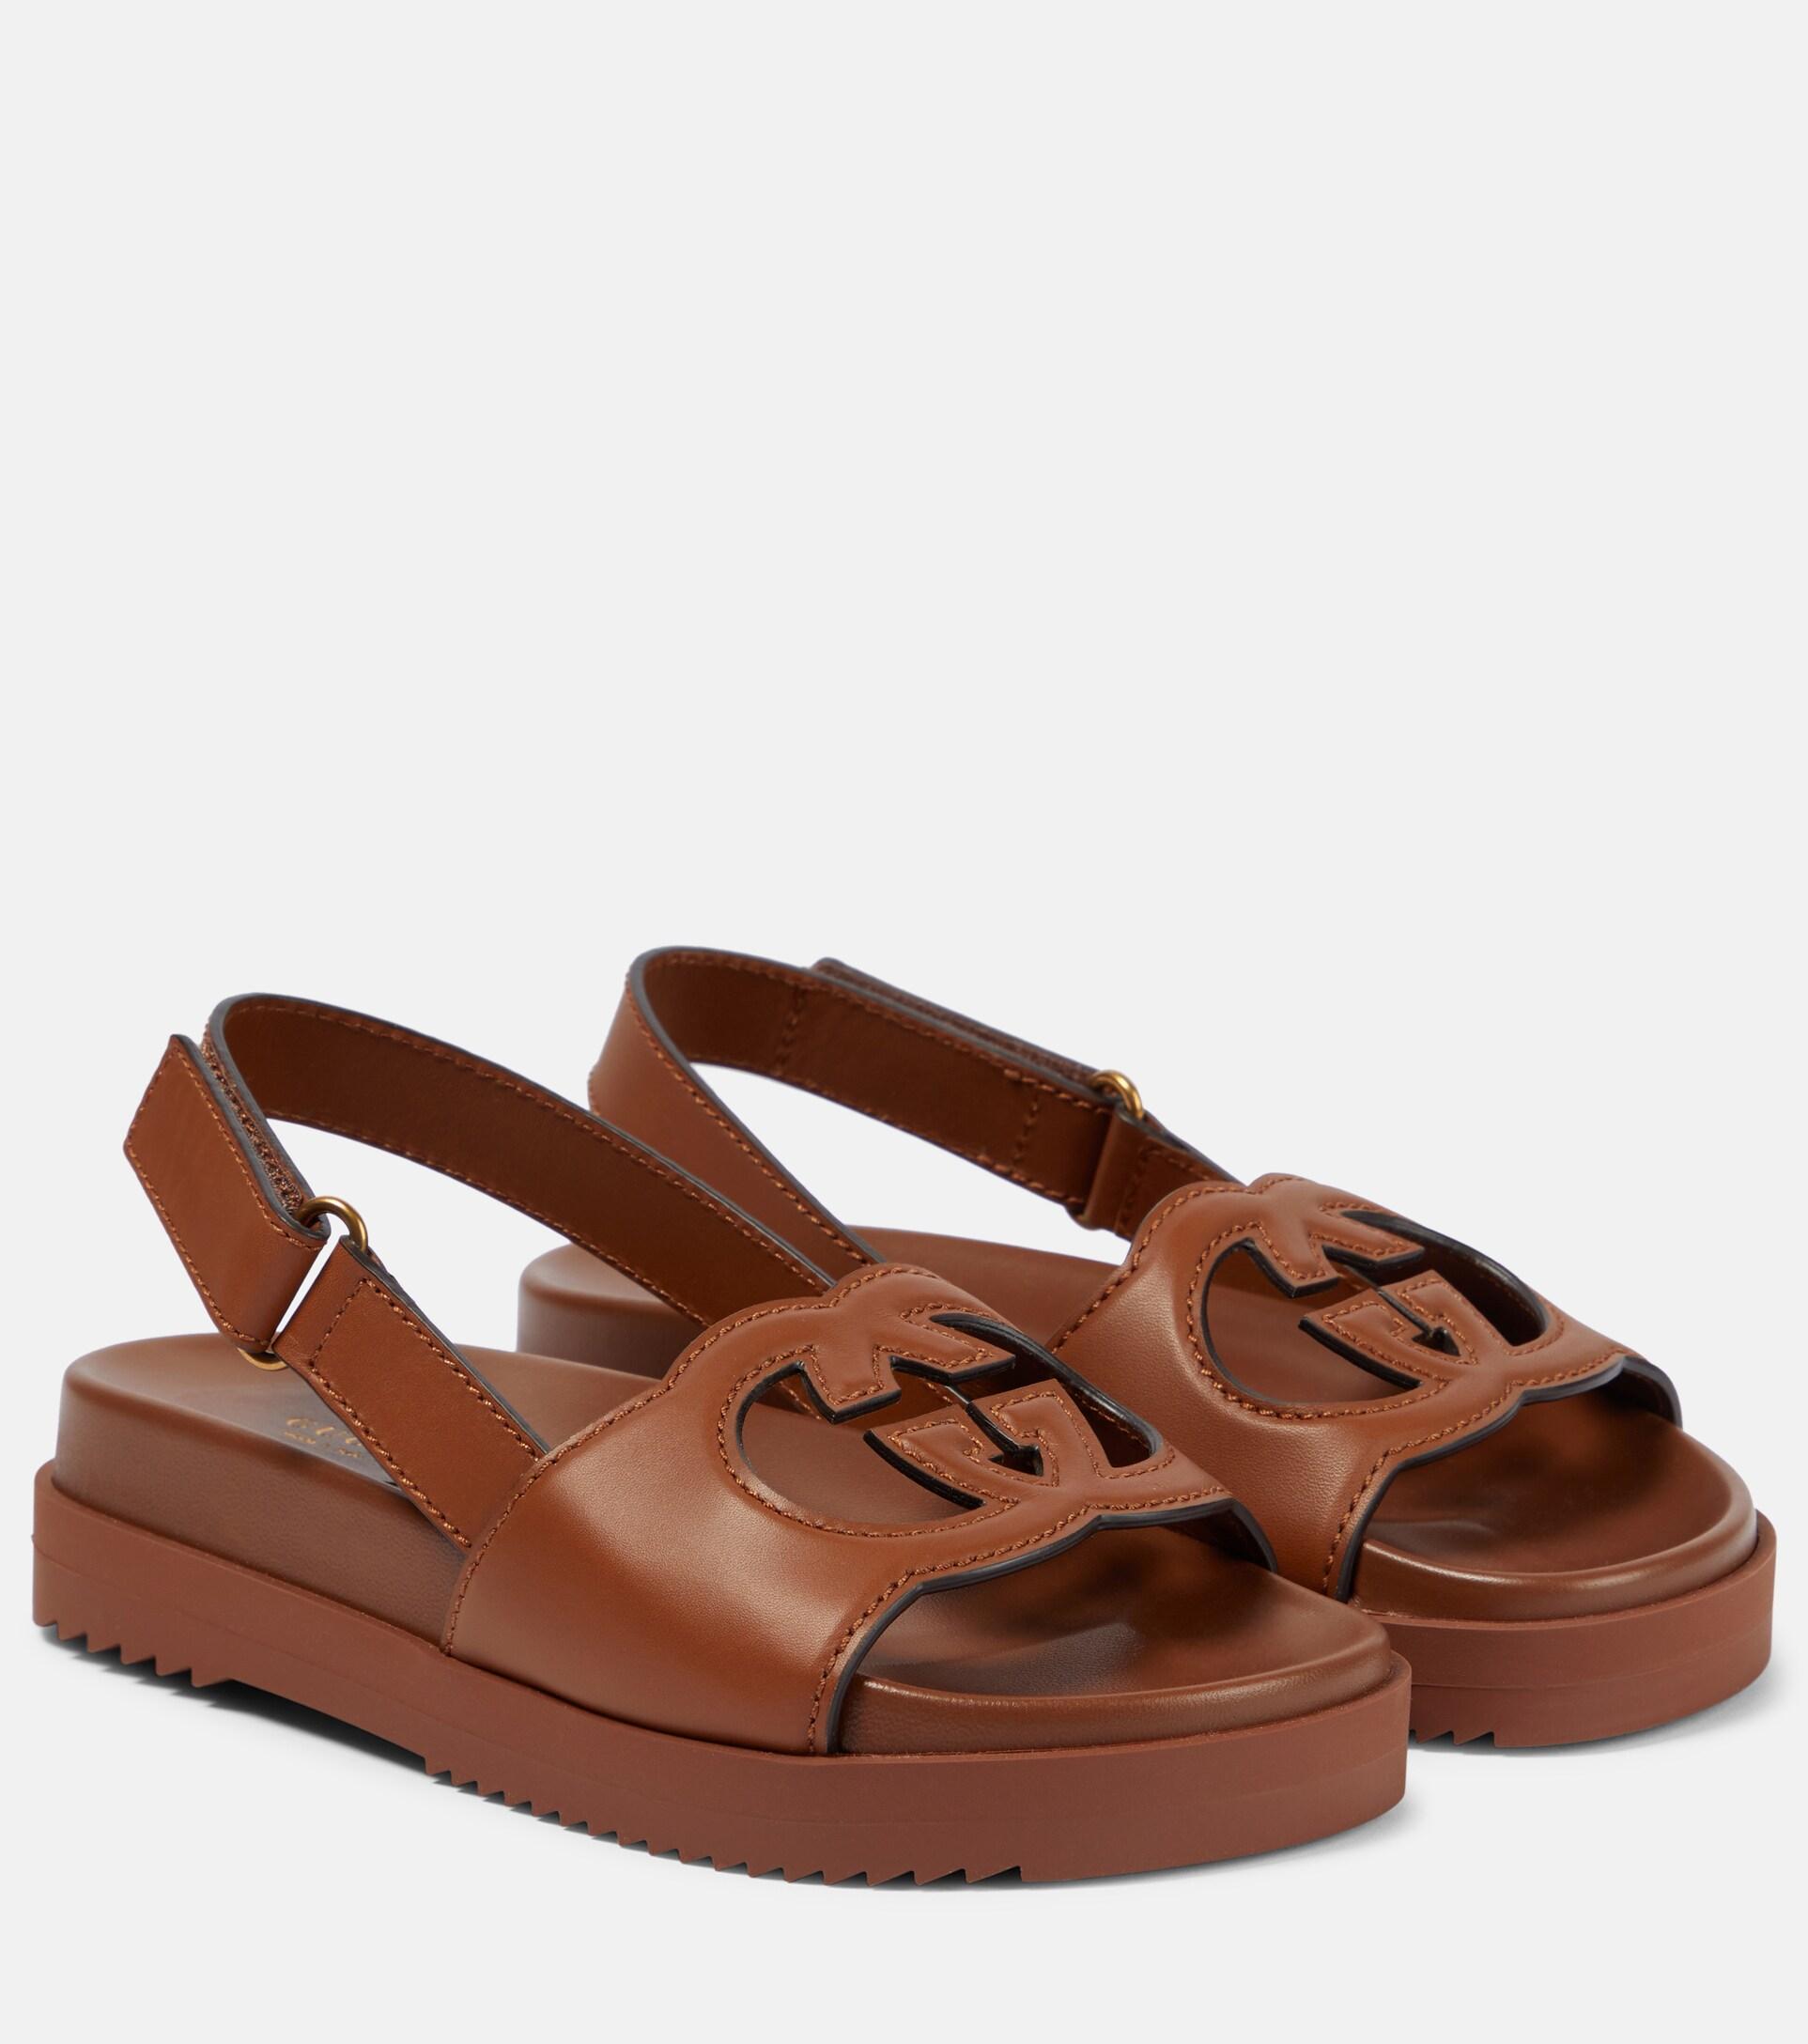 Gucci Interlocking G Leather Sandals in Brown | Lyst